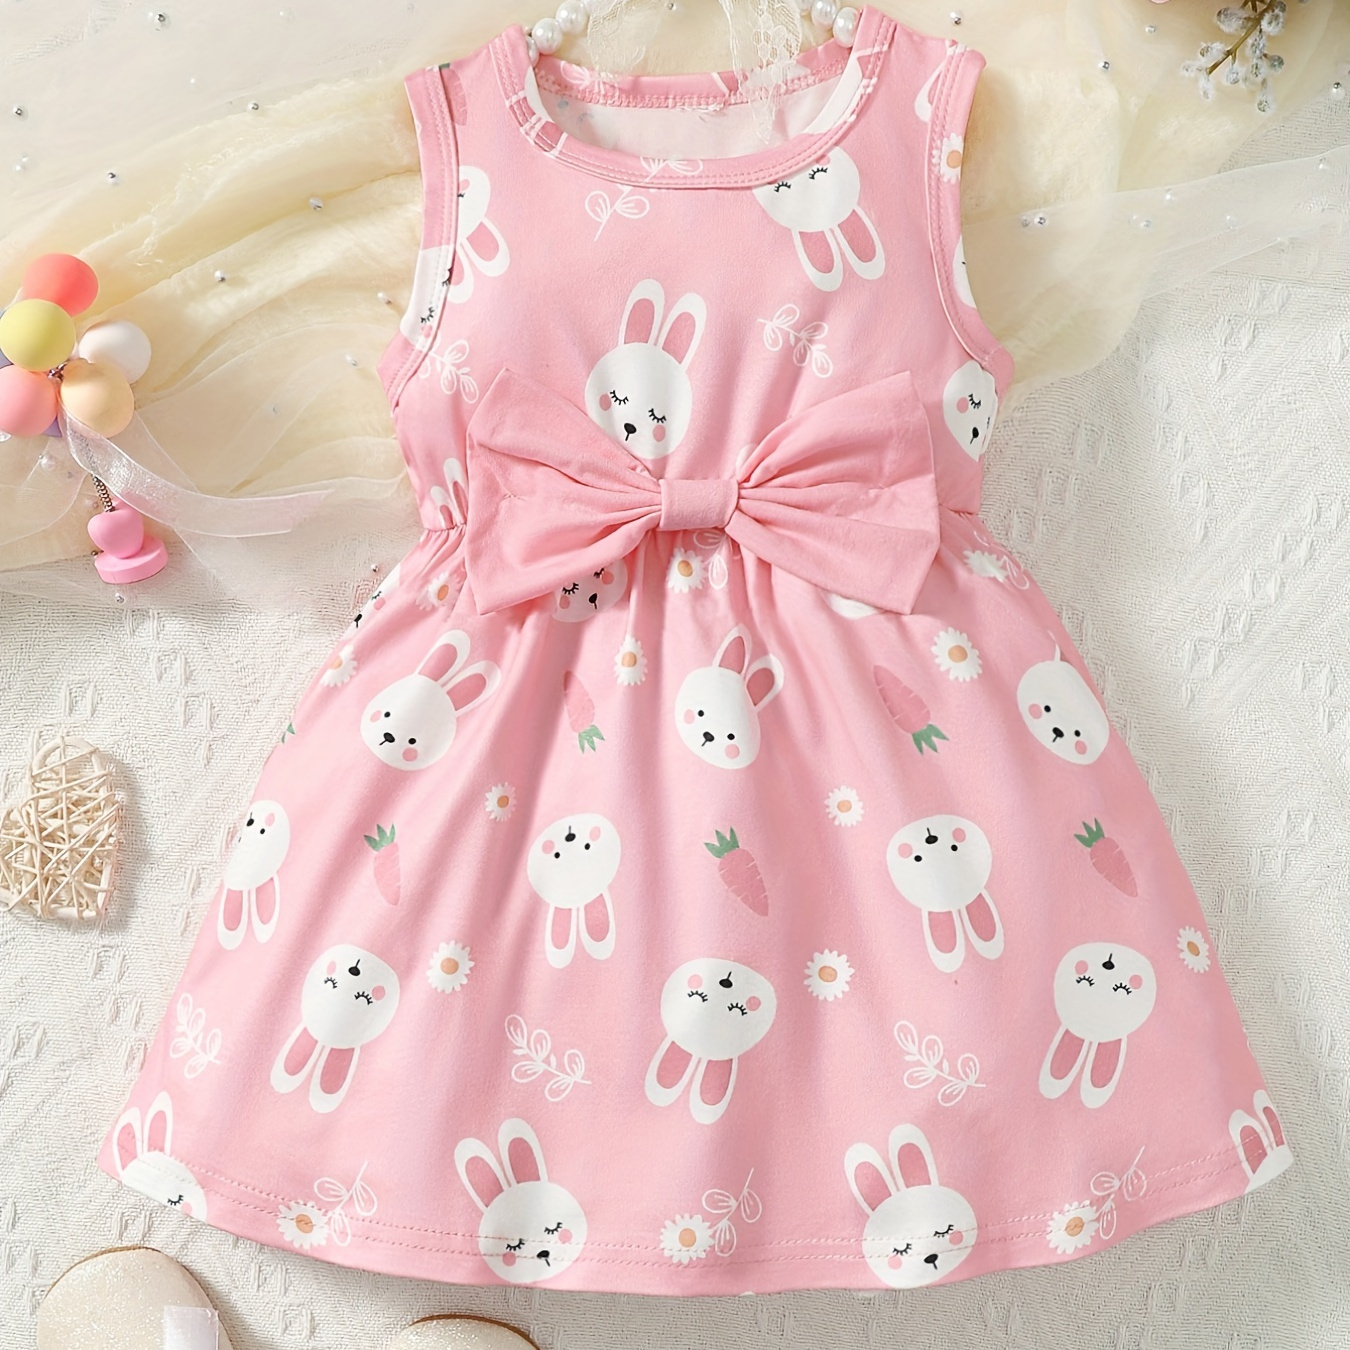 

Baby Girls Cute Rabbit Graphic Print Bowknot Sleeveless Dress Clothes